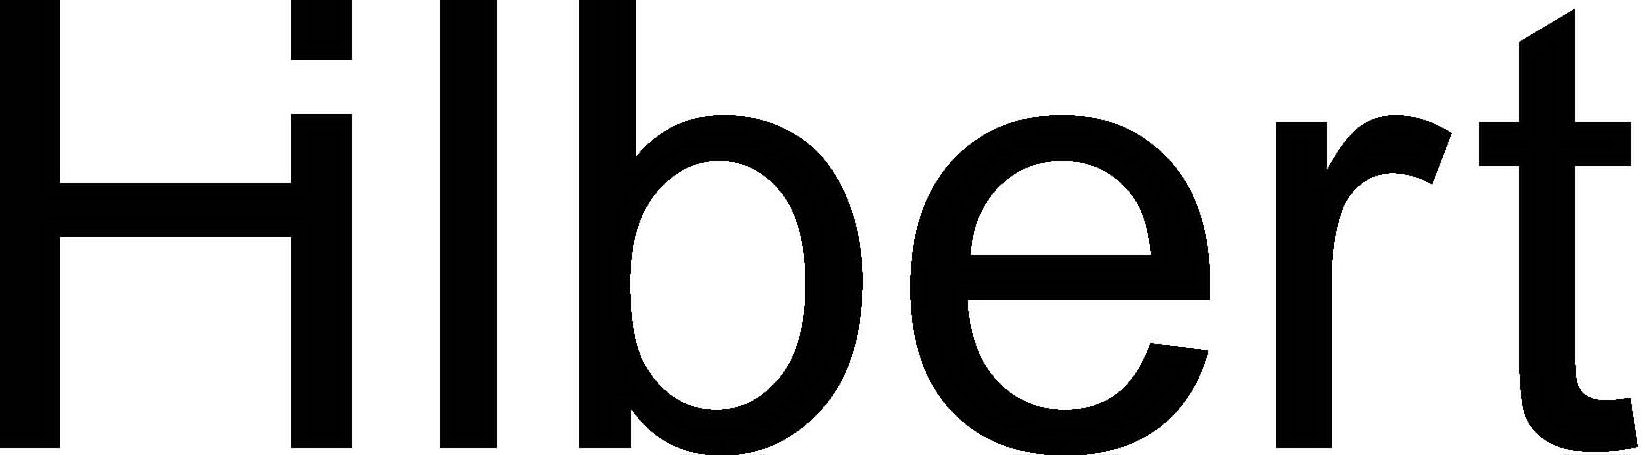 Trademark Logo HILBERT